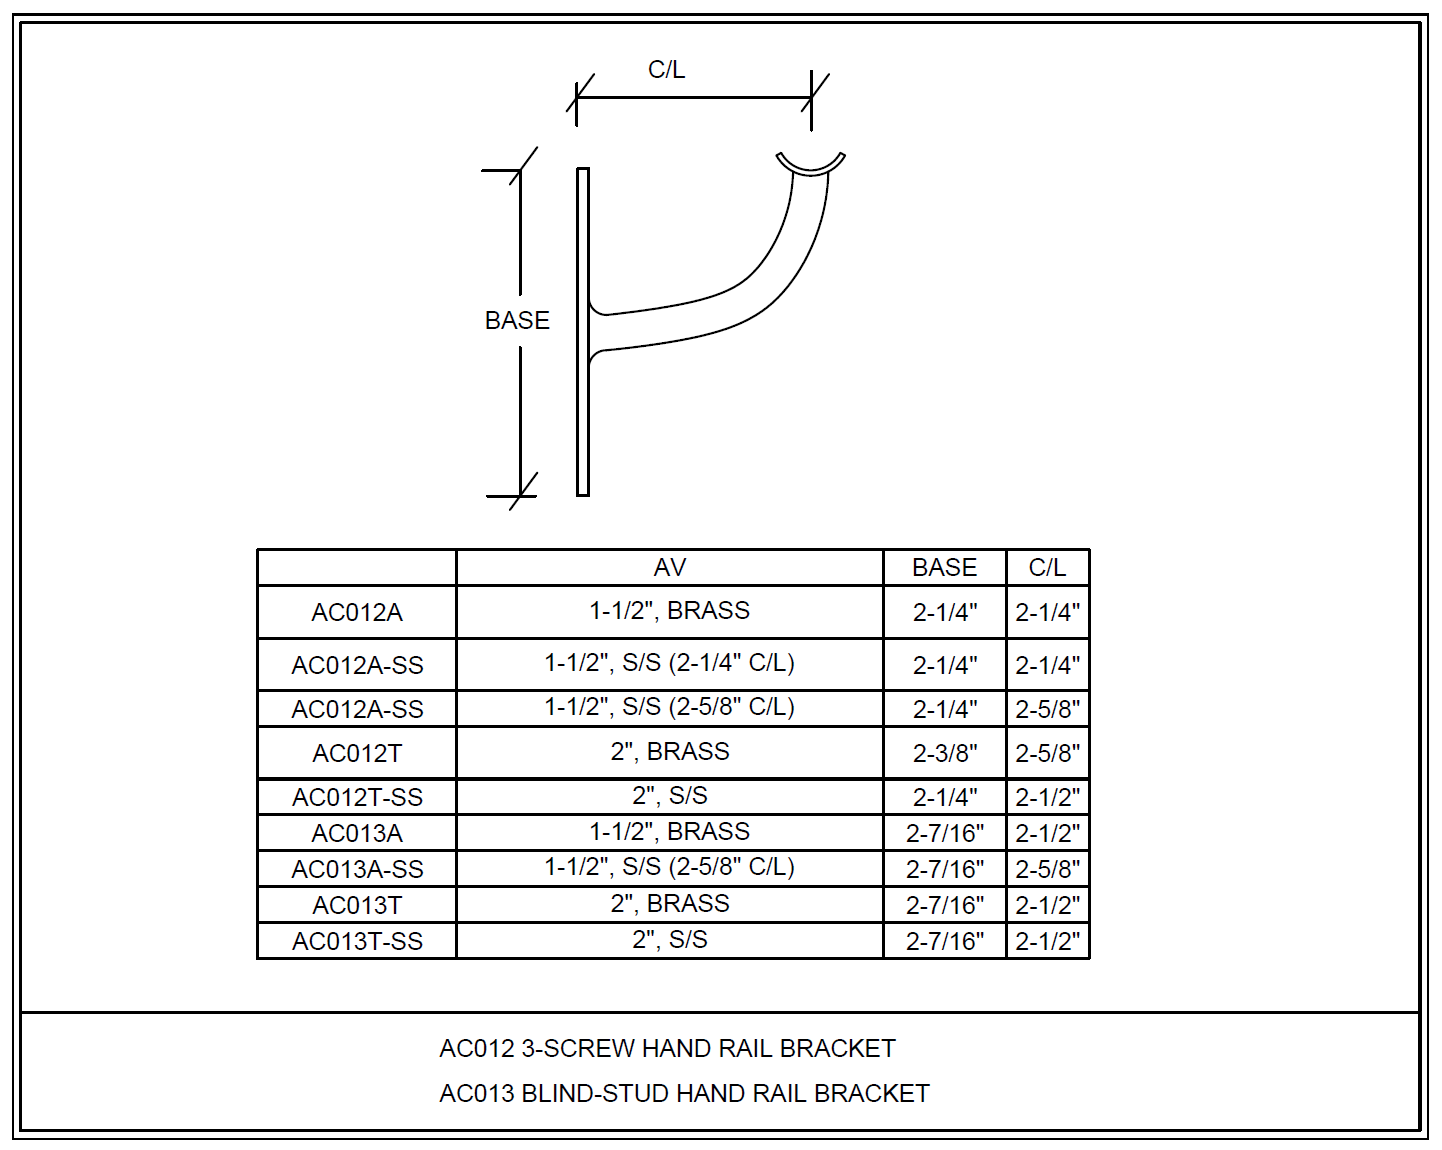 Blind Stud Handrail Bracket 1.5" (Brass 2 1/2" C /L, Stainless 2 5/8" C/L) - All finishes